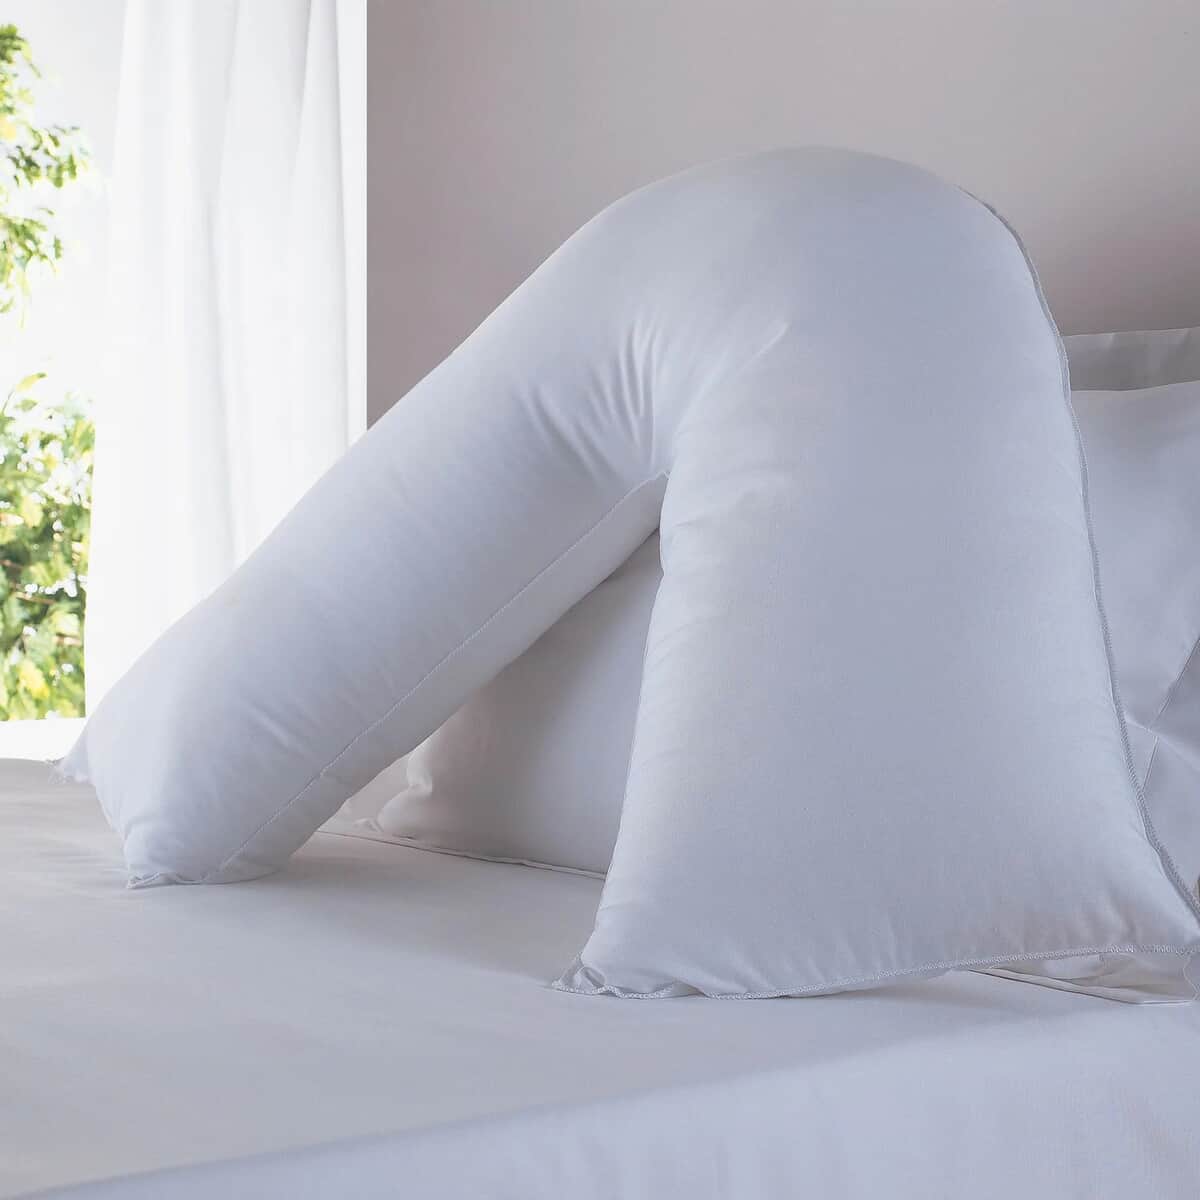 Fine Bedding Co V-Shaped Back Support Pillow large